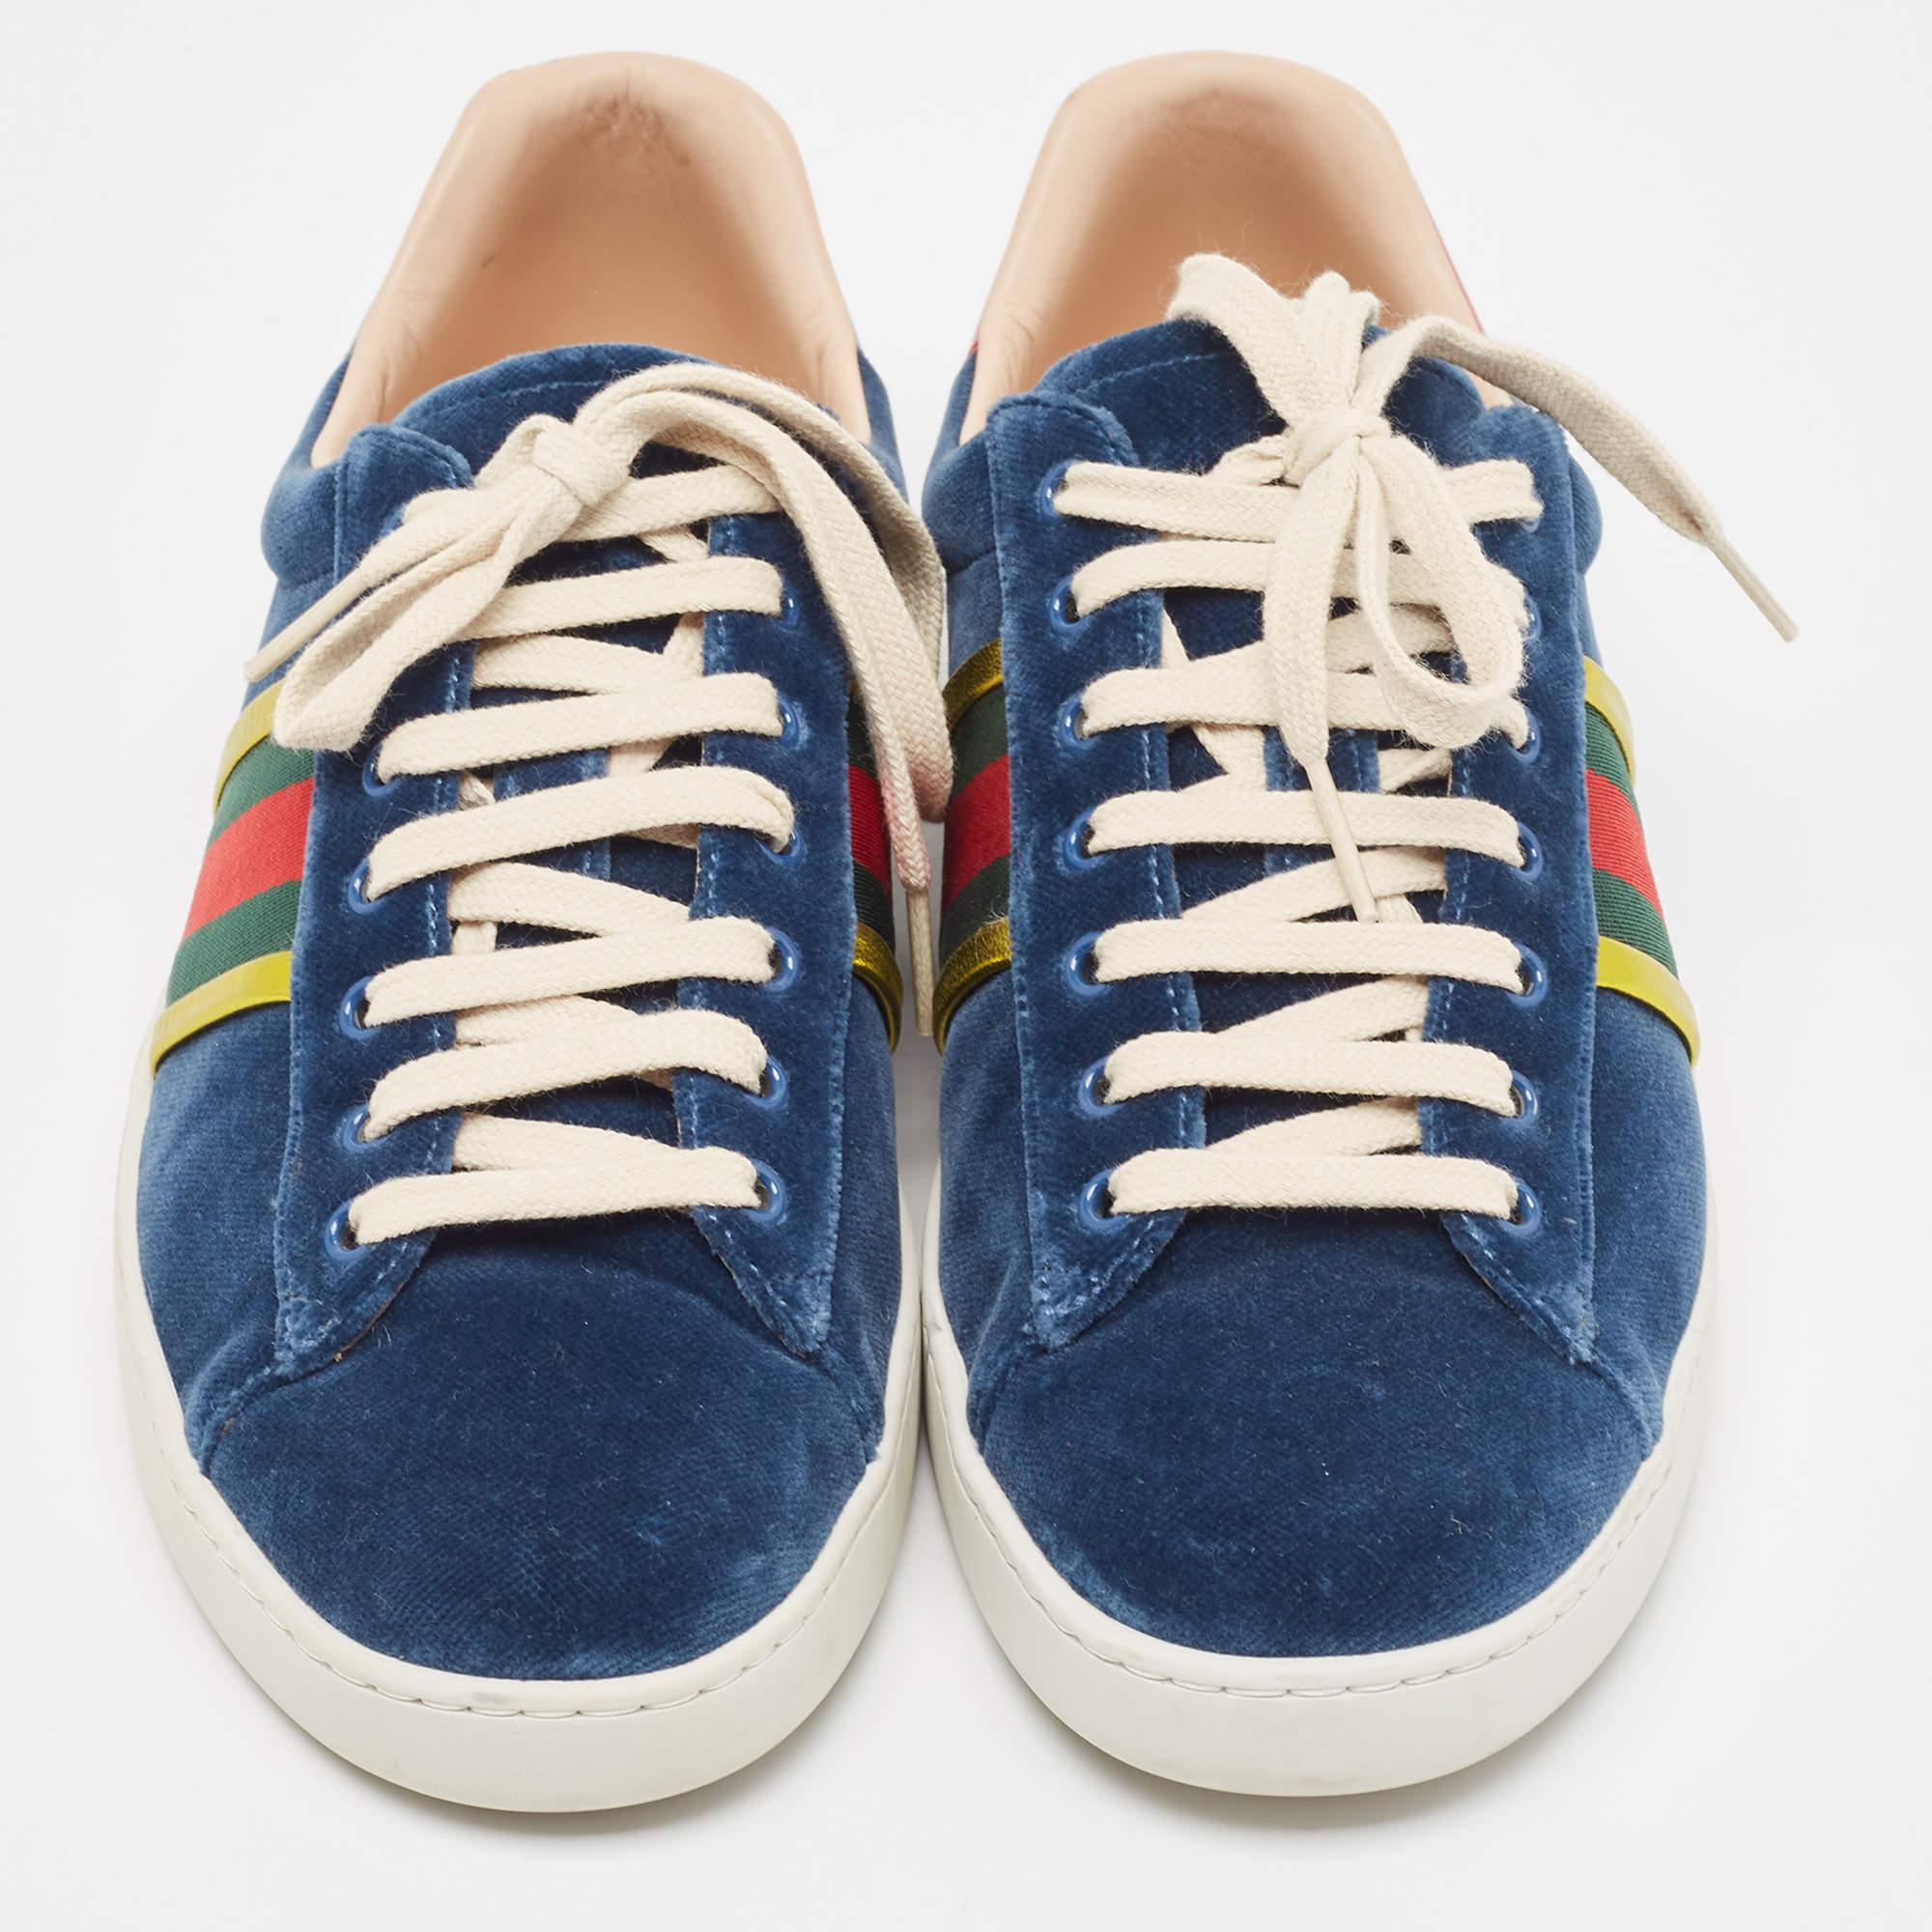 Gucci Blue Velvet And Foil Leather Web Detail Ace Sneakers Size 42.5 In Good Condition For Sale In Dubai, Al Qouz 2